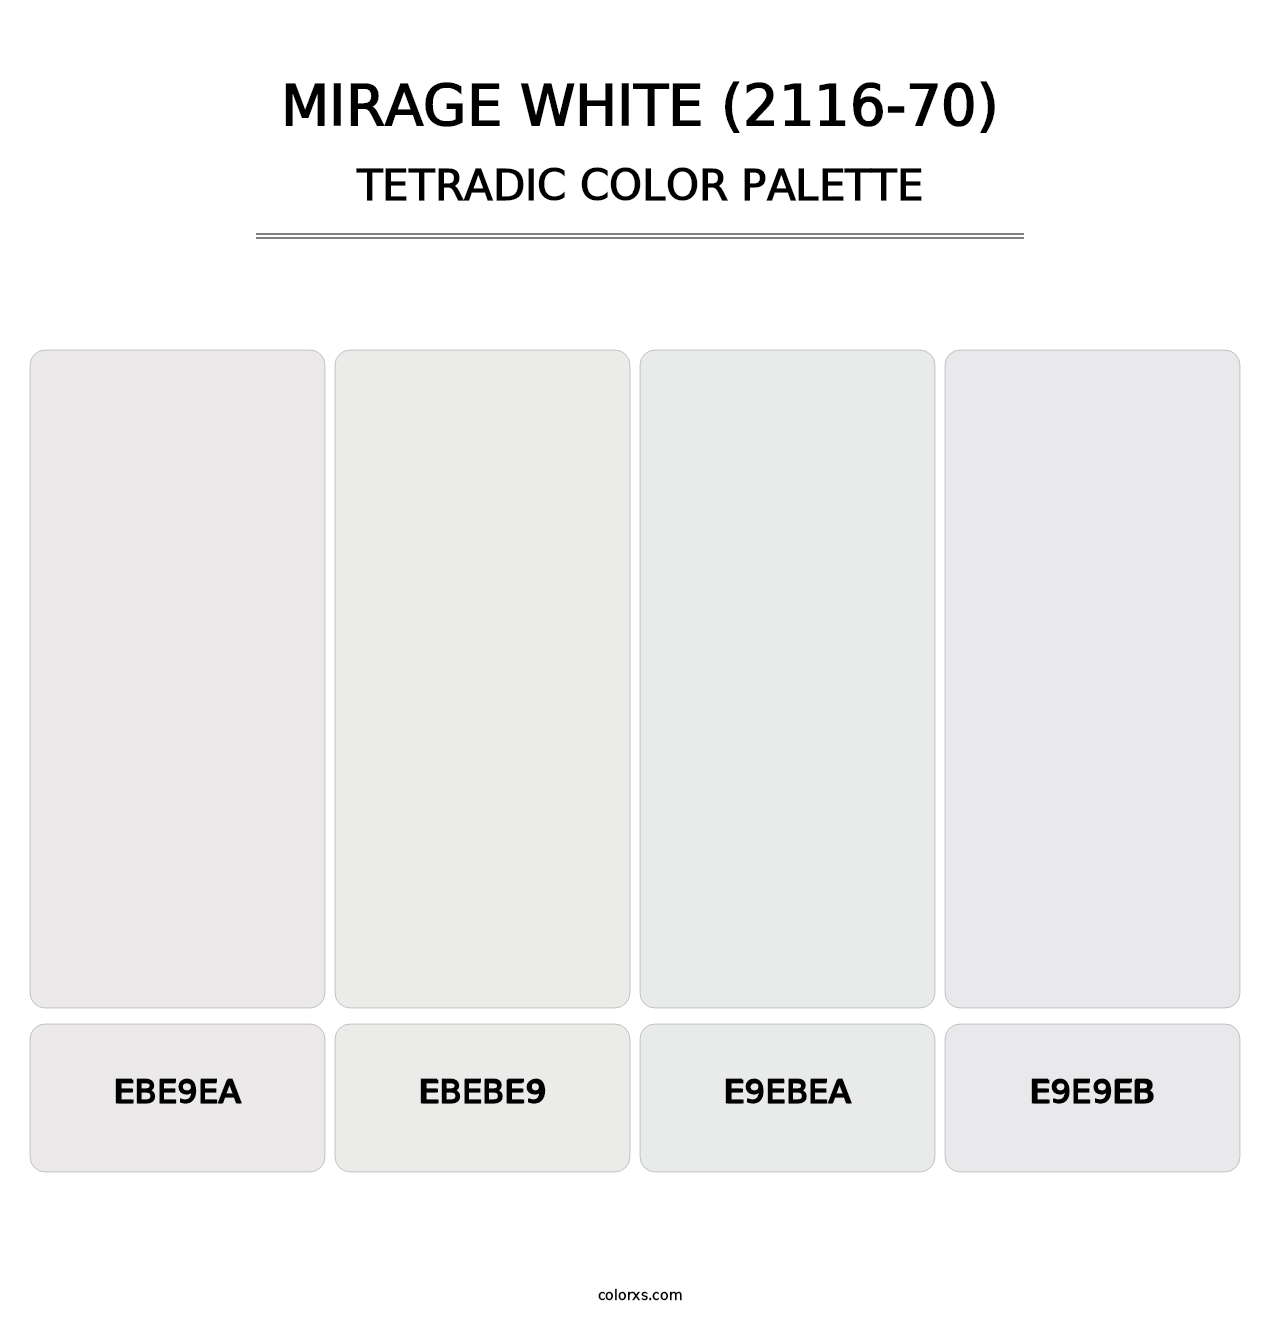 Mirage White (2116-70) - Tetradic Color Palette